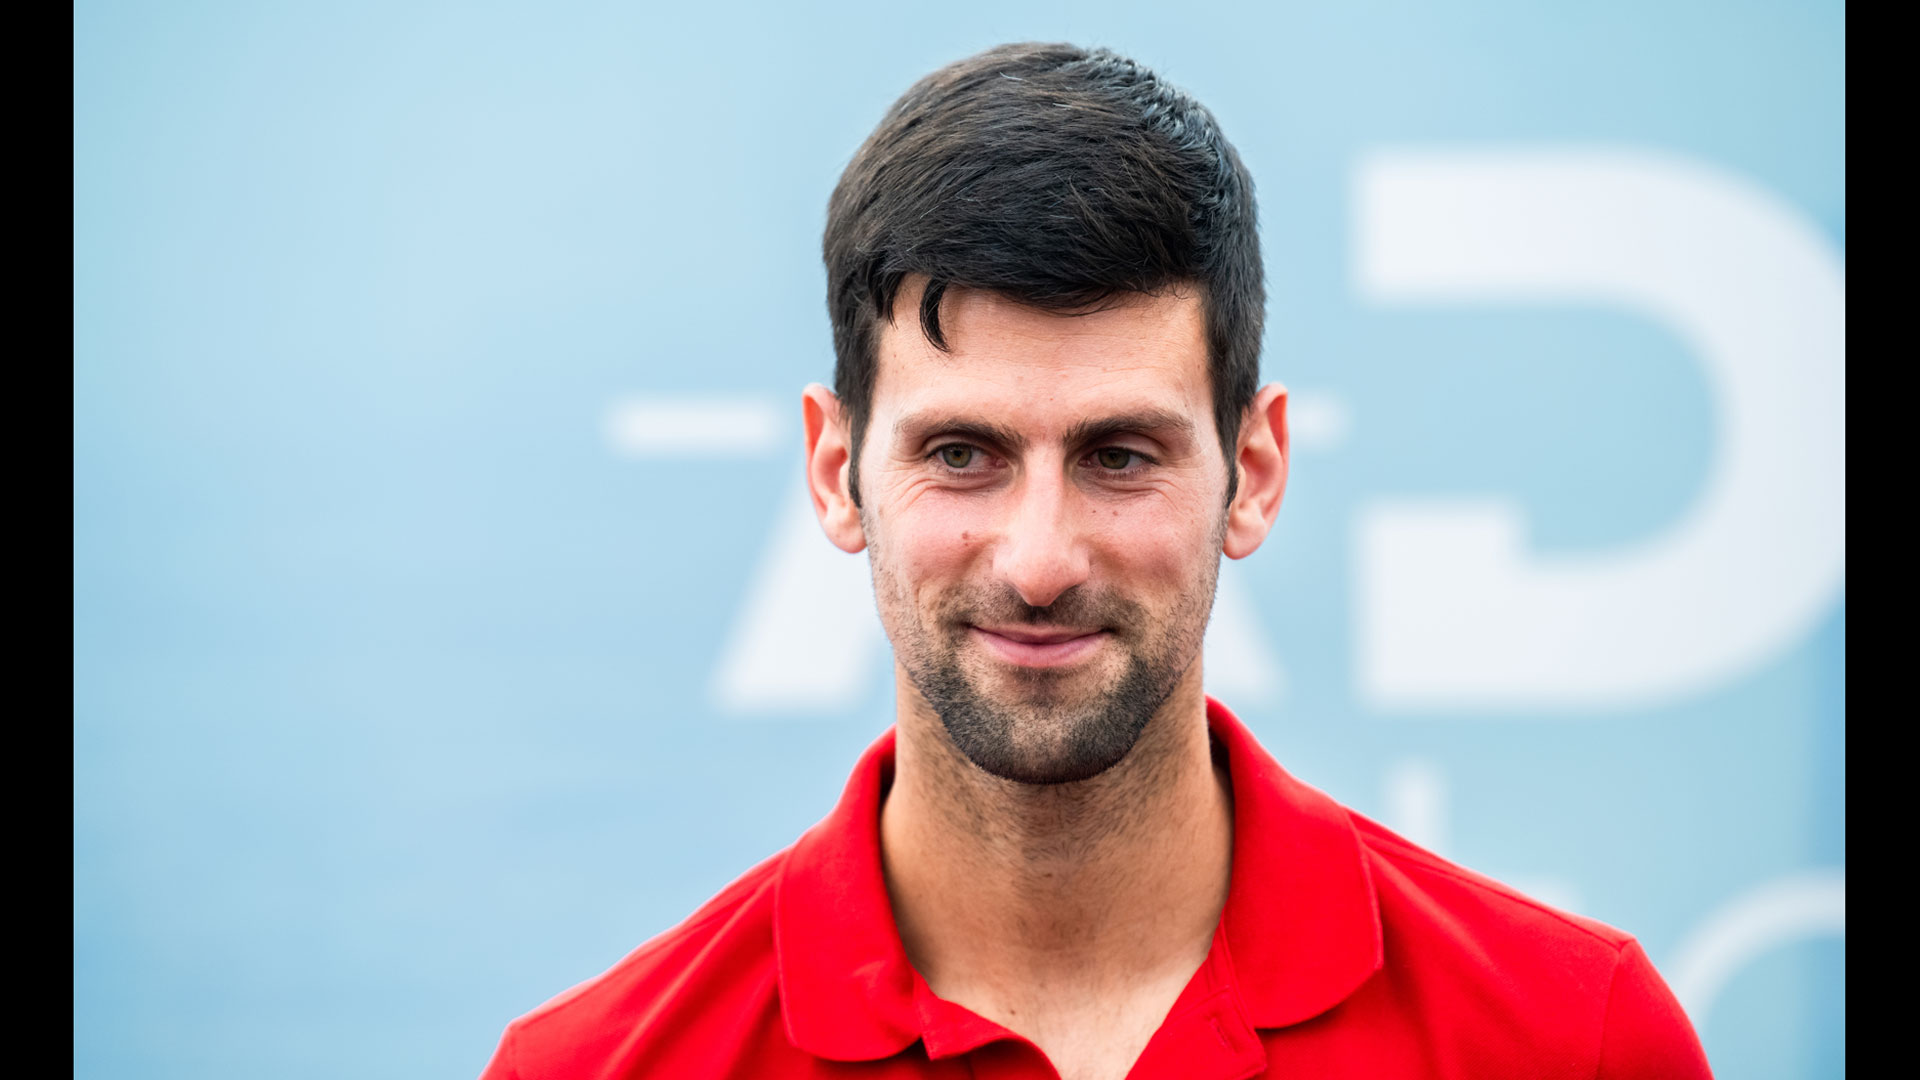 BAM! News - Sportif non-vacciné : Novak Djokovic remporte Wimbledon